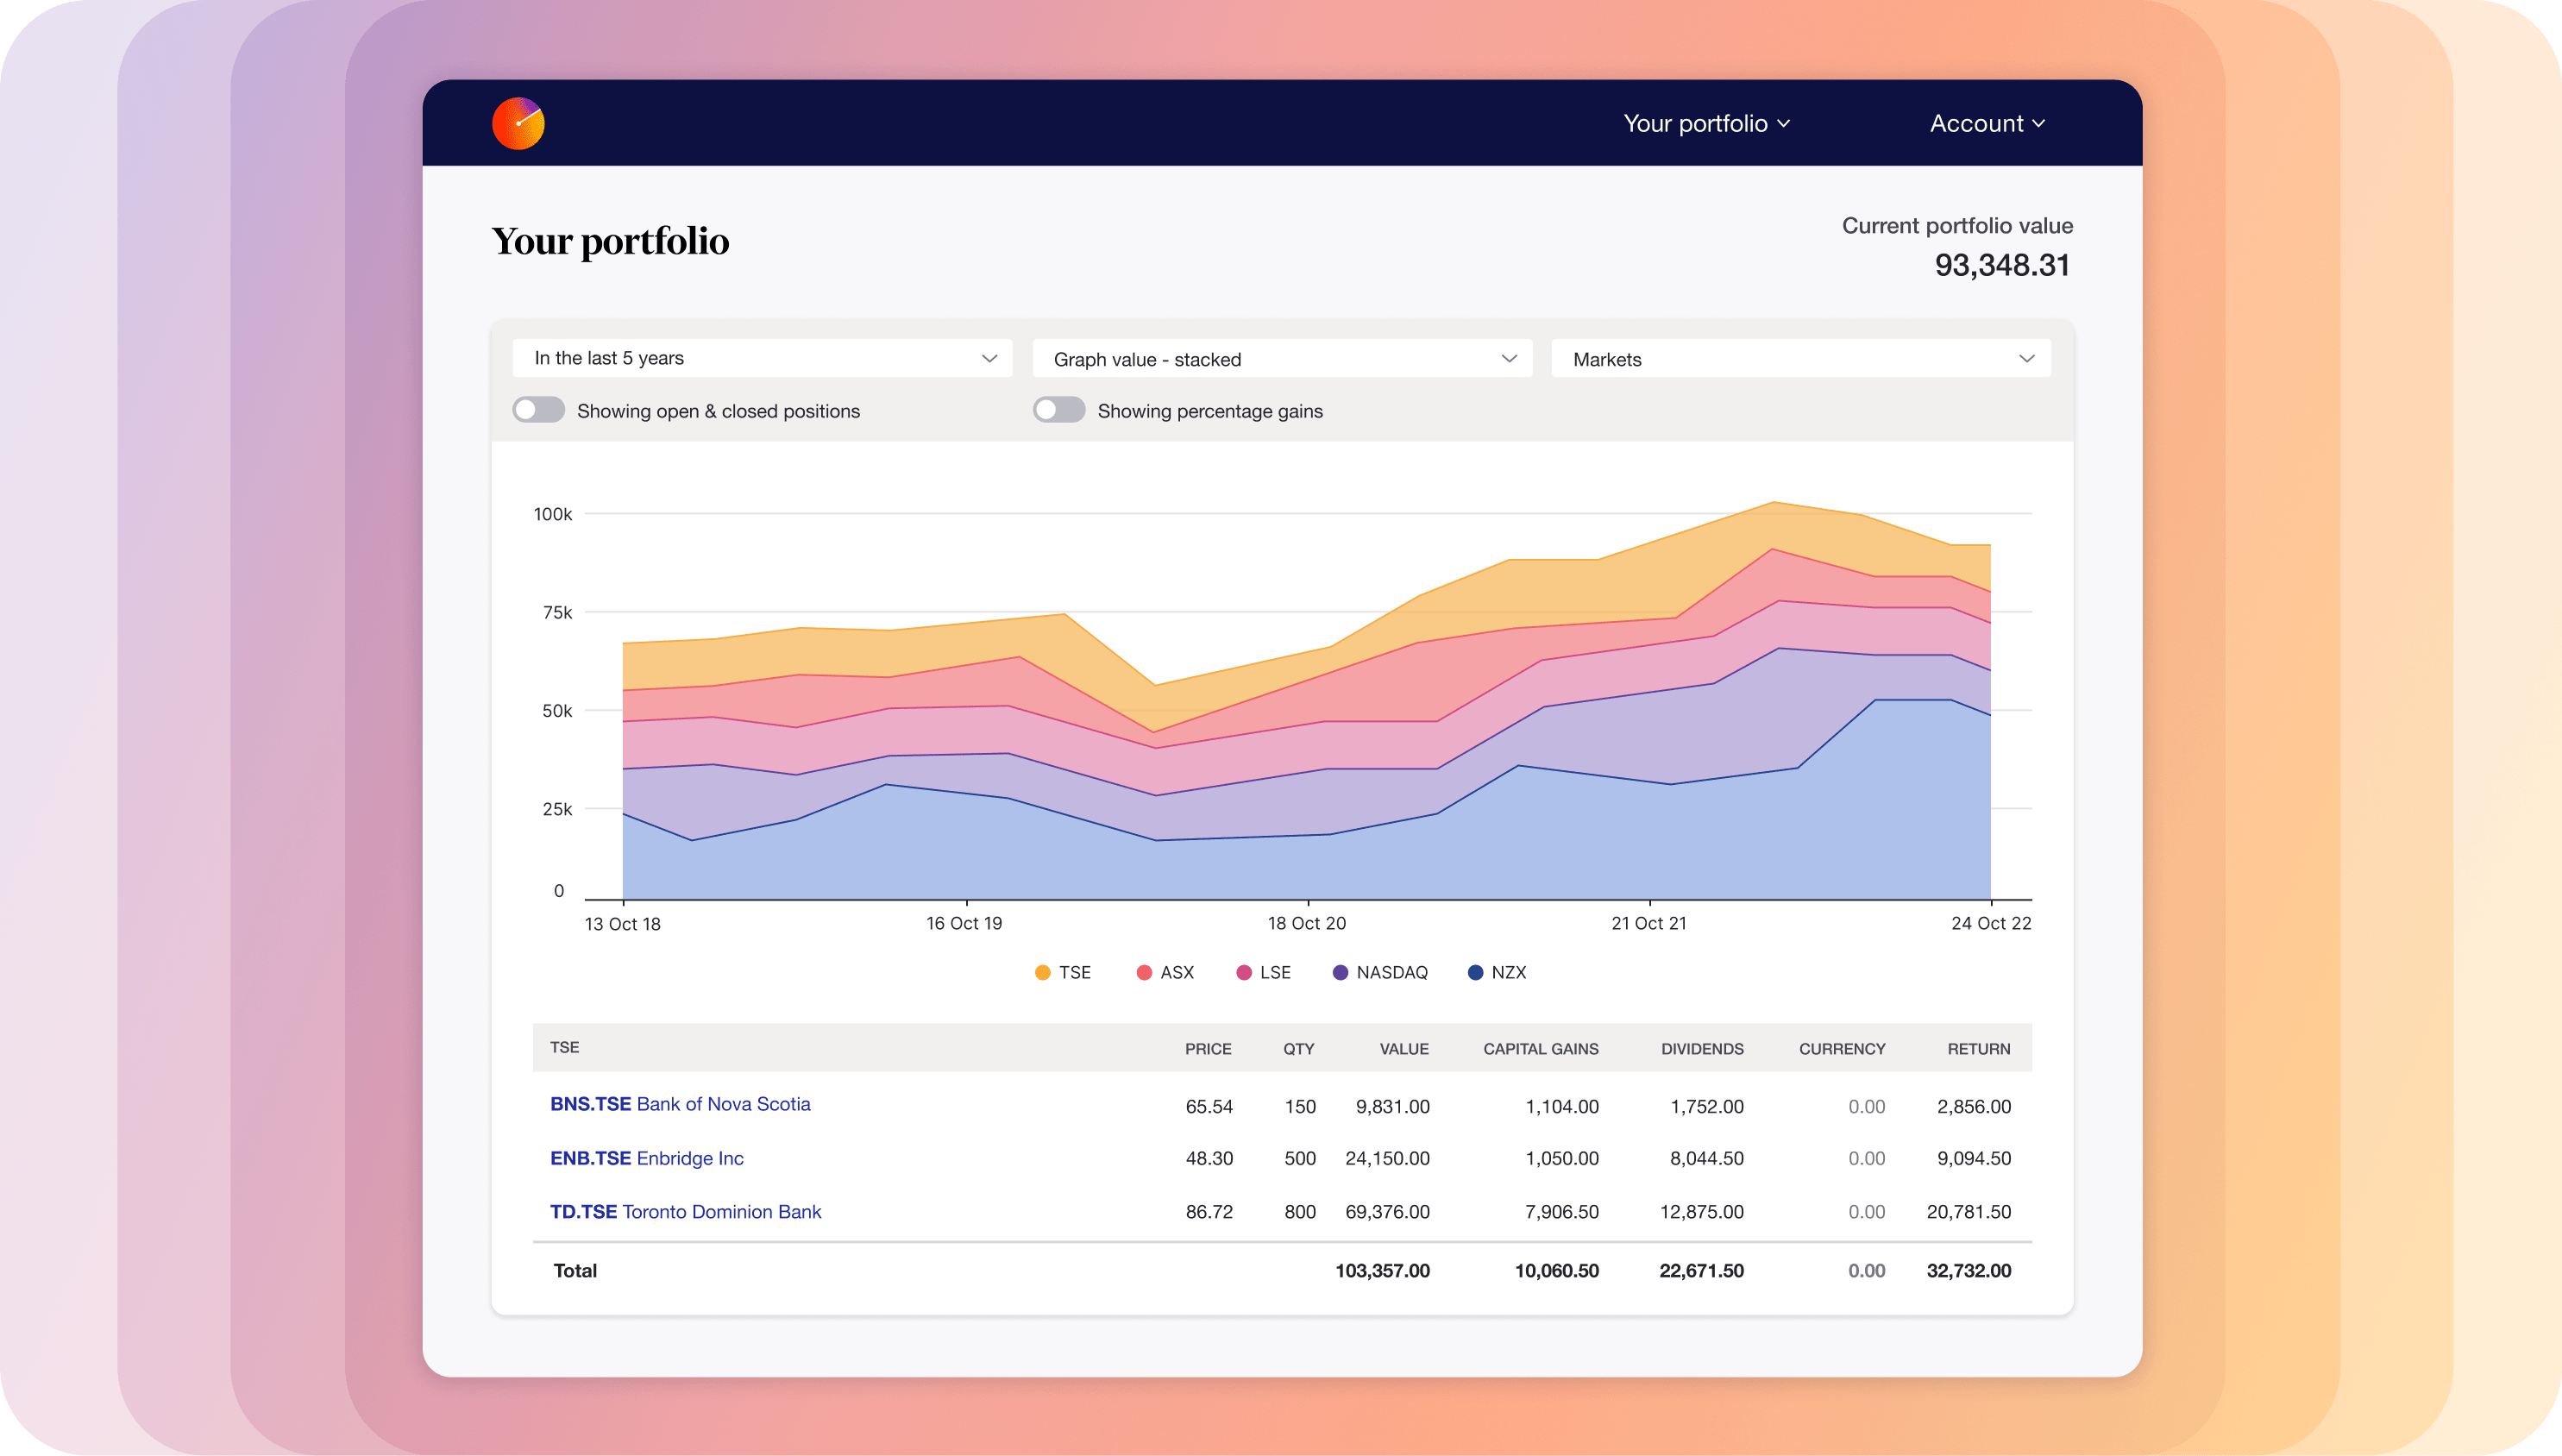 User Interface of Sharesight's portfolio management tool